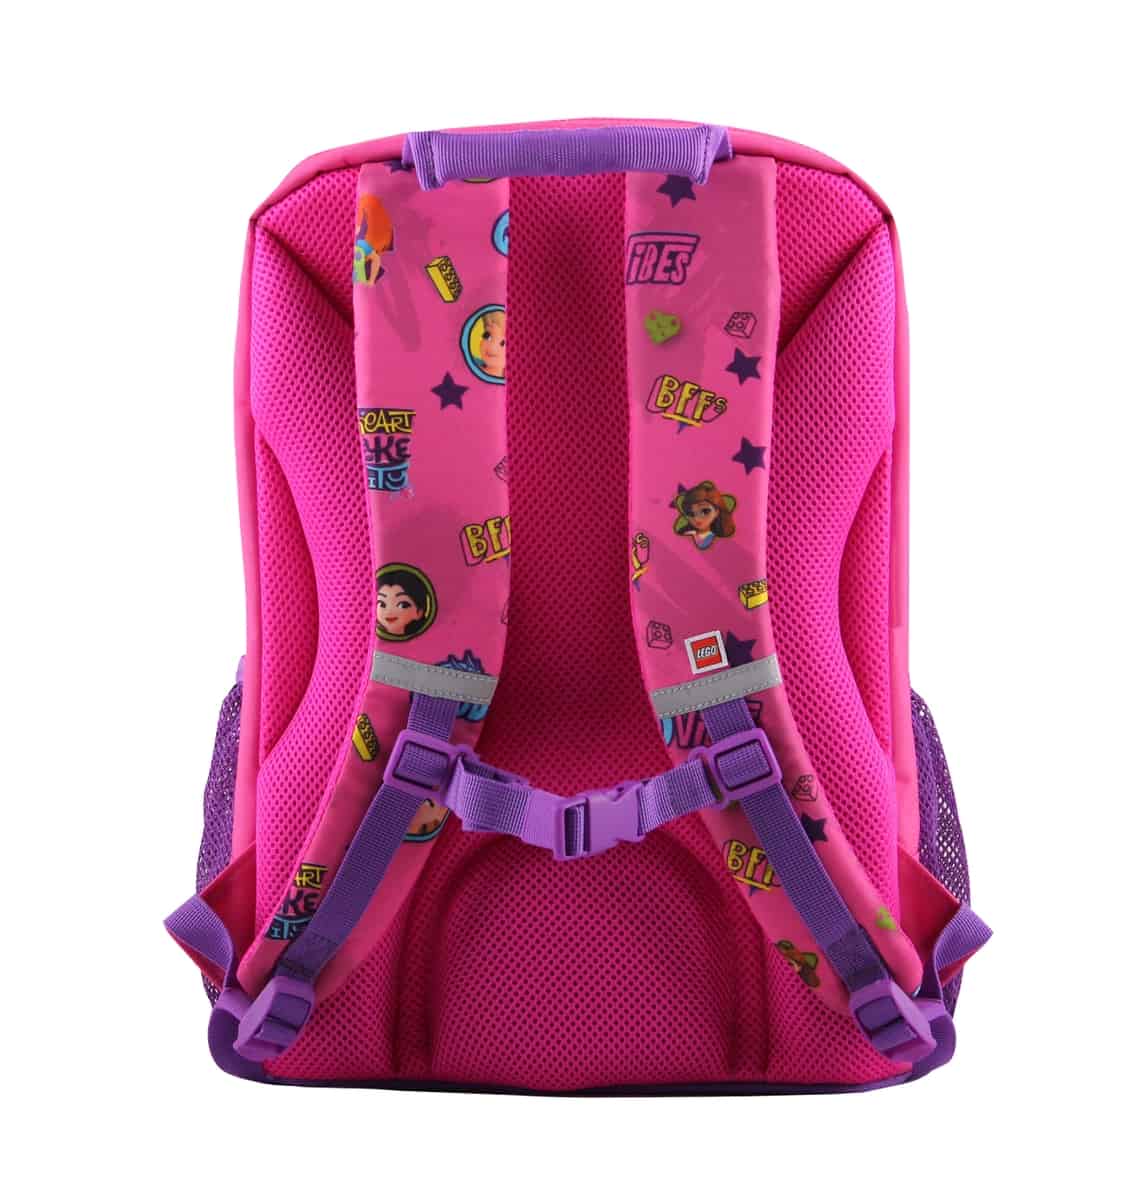 lego 5005919 friends belight backpack